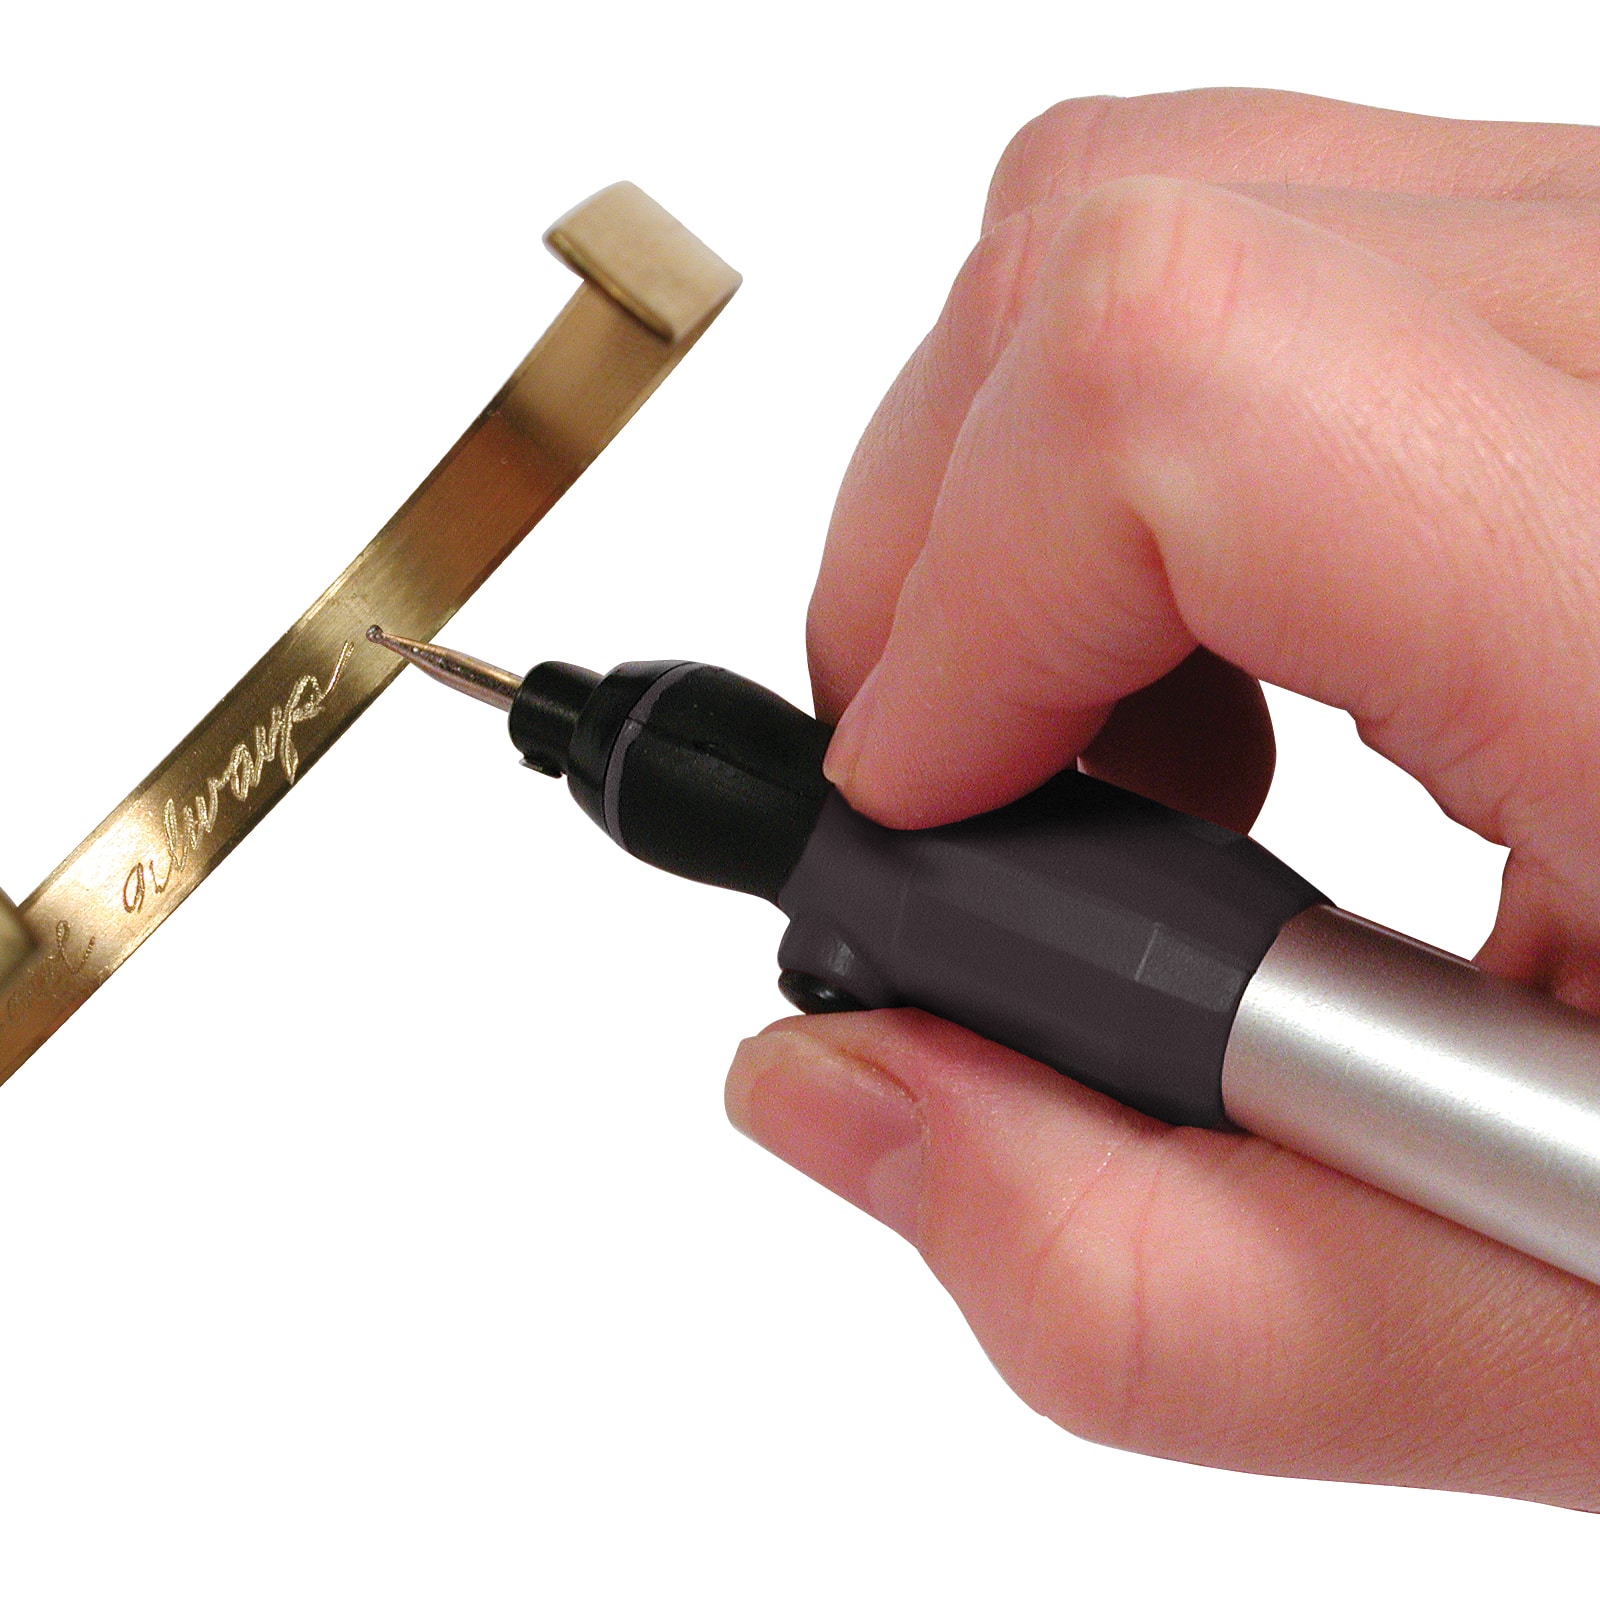 Micro Engraver Pen, Hand Held Engraving Tool 